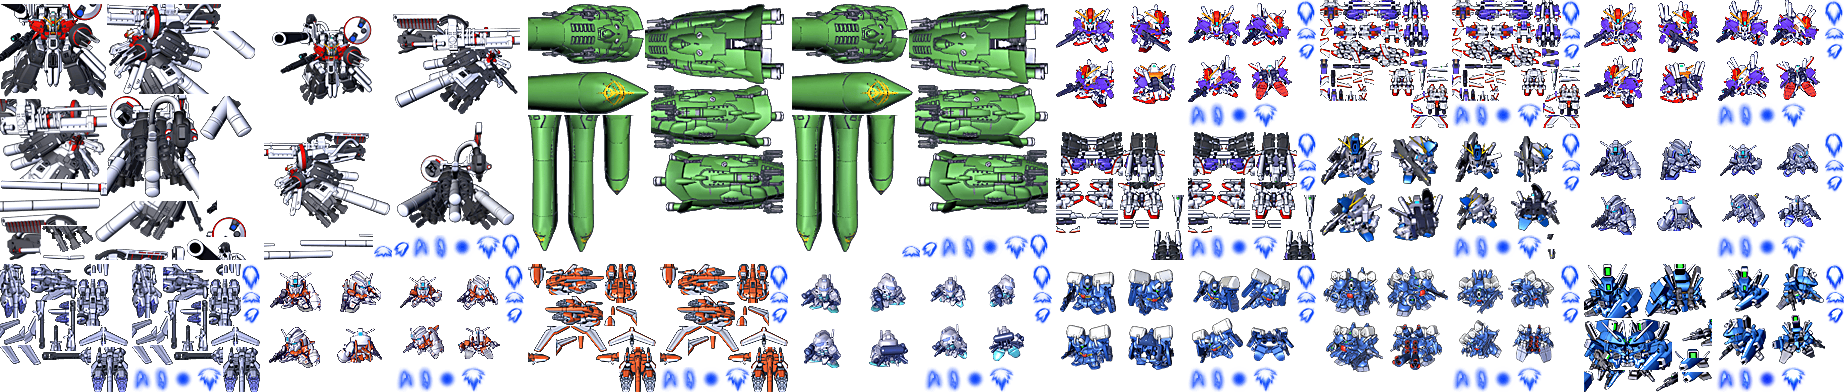 SD Gundam G Generation Spirits - Sentinel